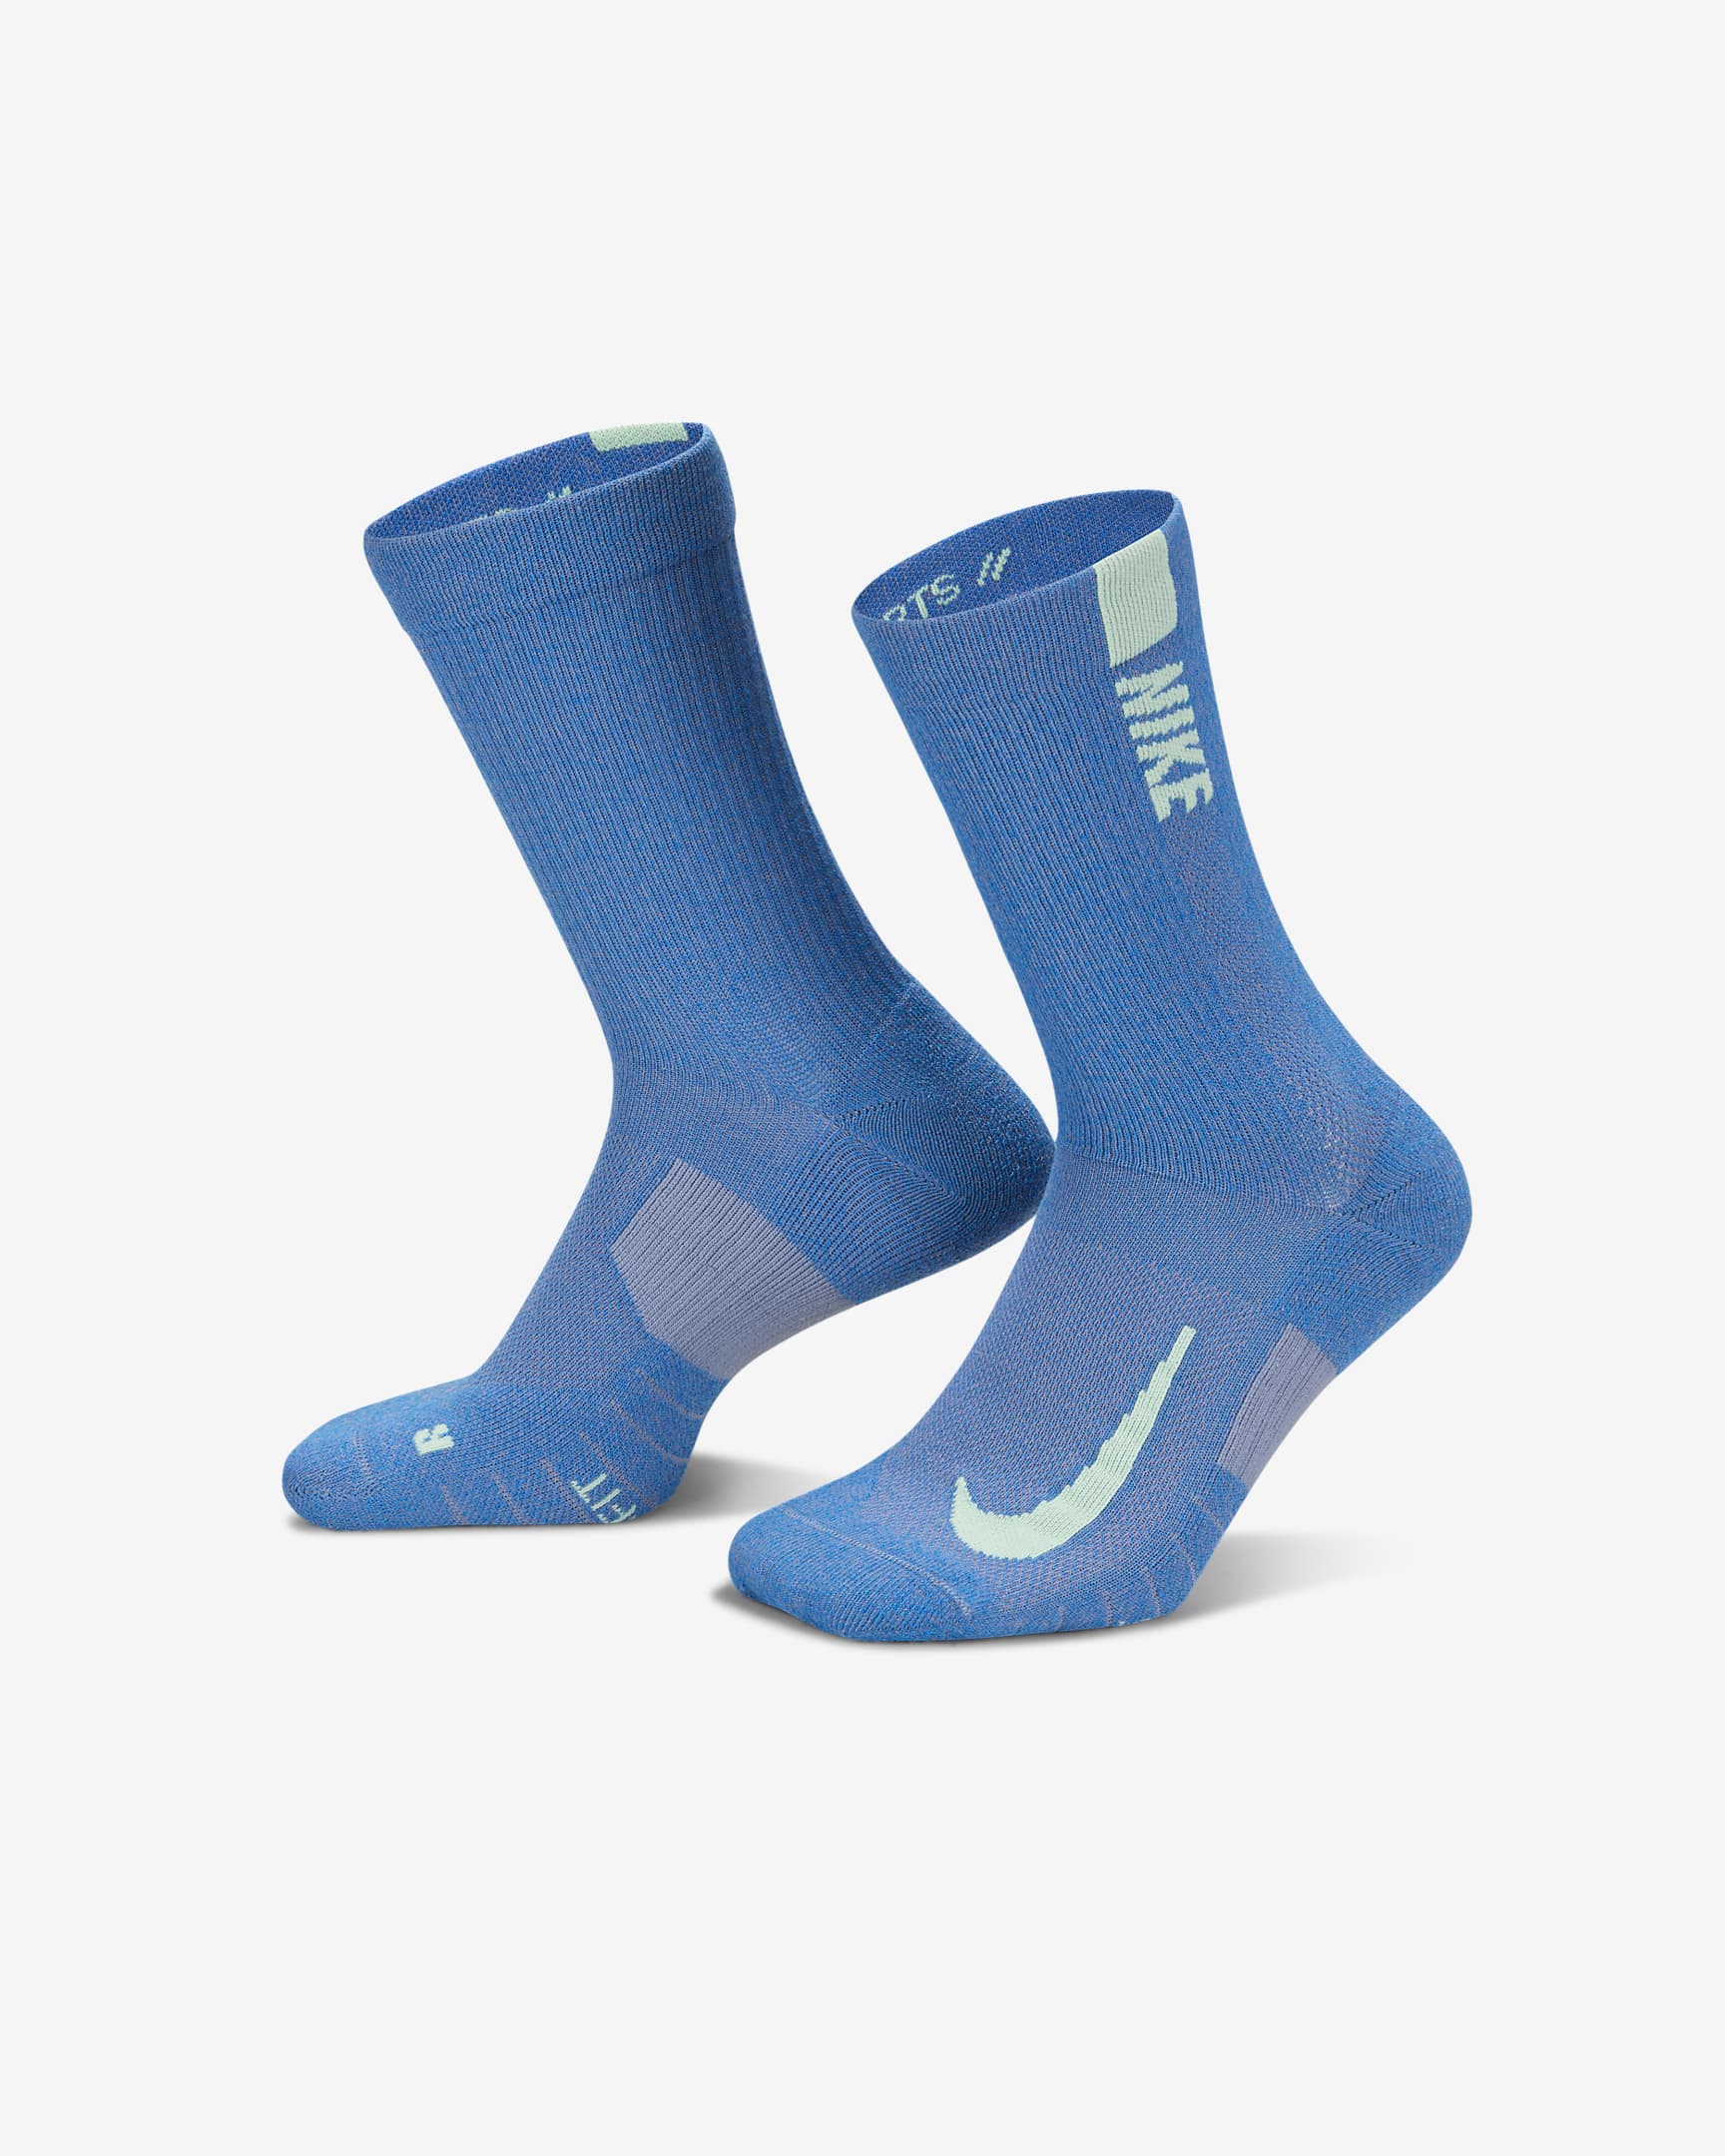 Nike Multiplier Crew Socks (2 Pairs) - Multi-Colour